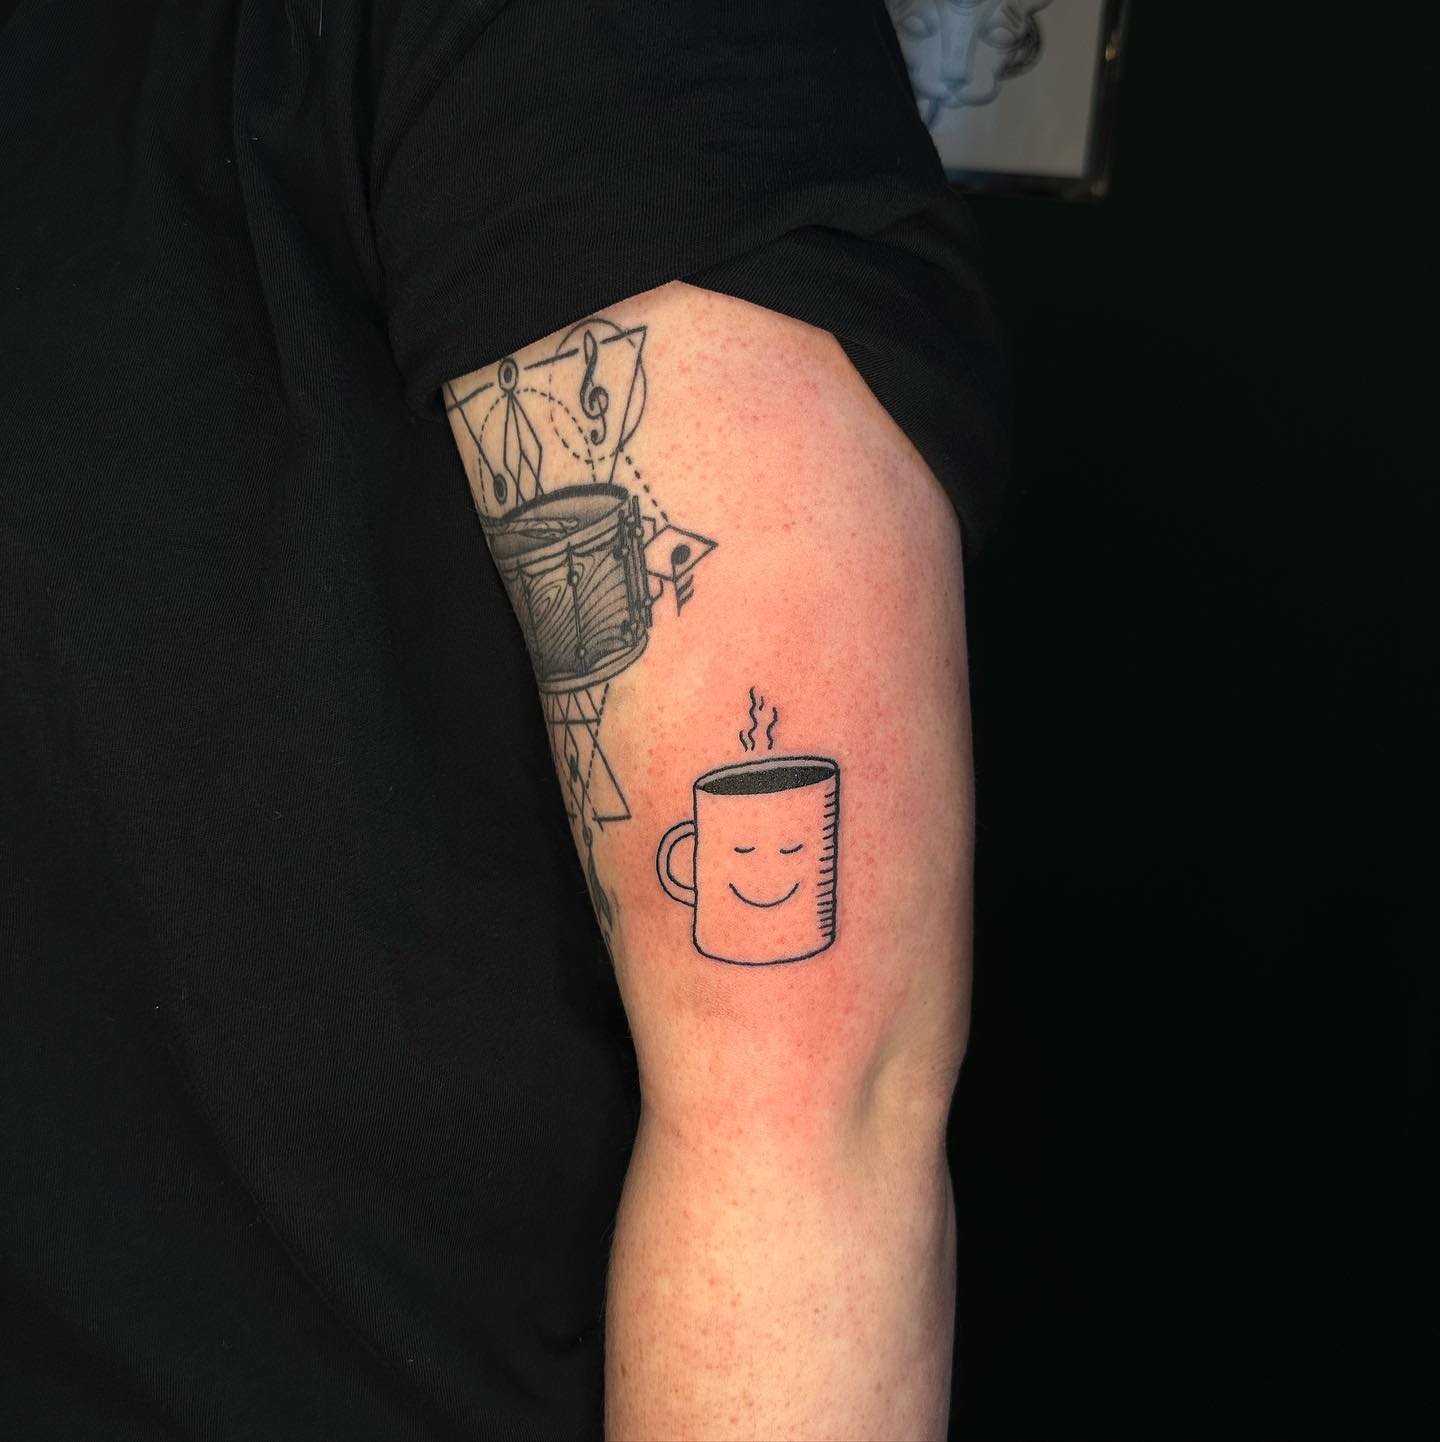 _coffee lovers_ 
.
.
#flash #flashtattoo #tattoo #tattoos #coffee #coffeelover #